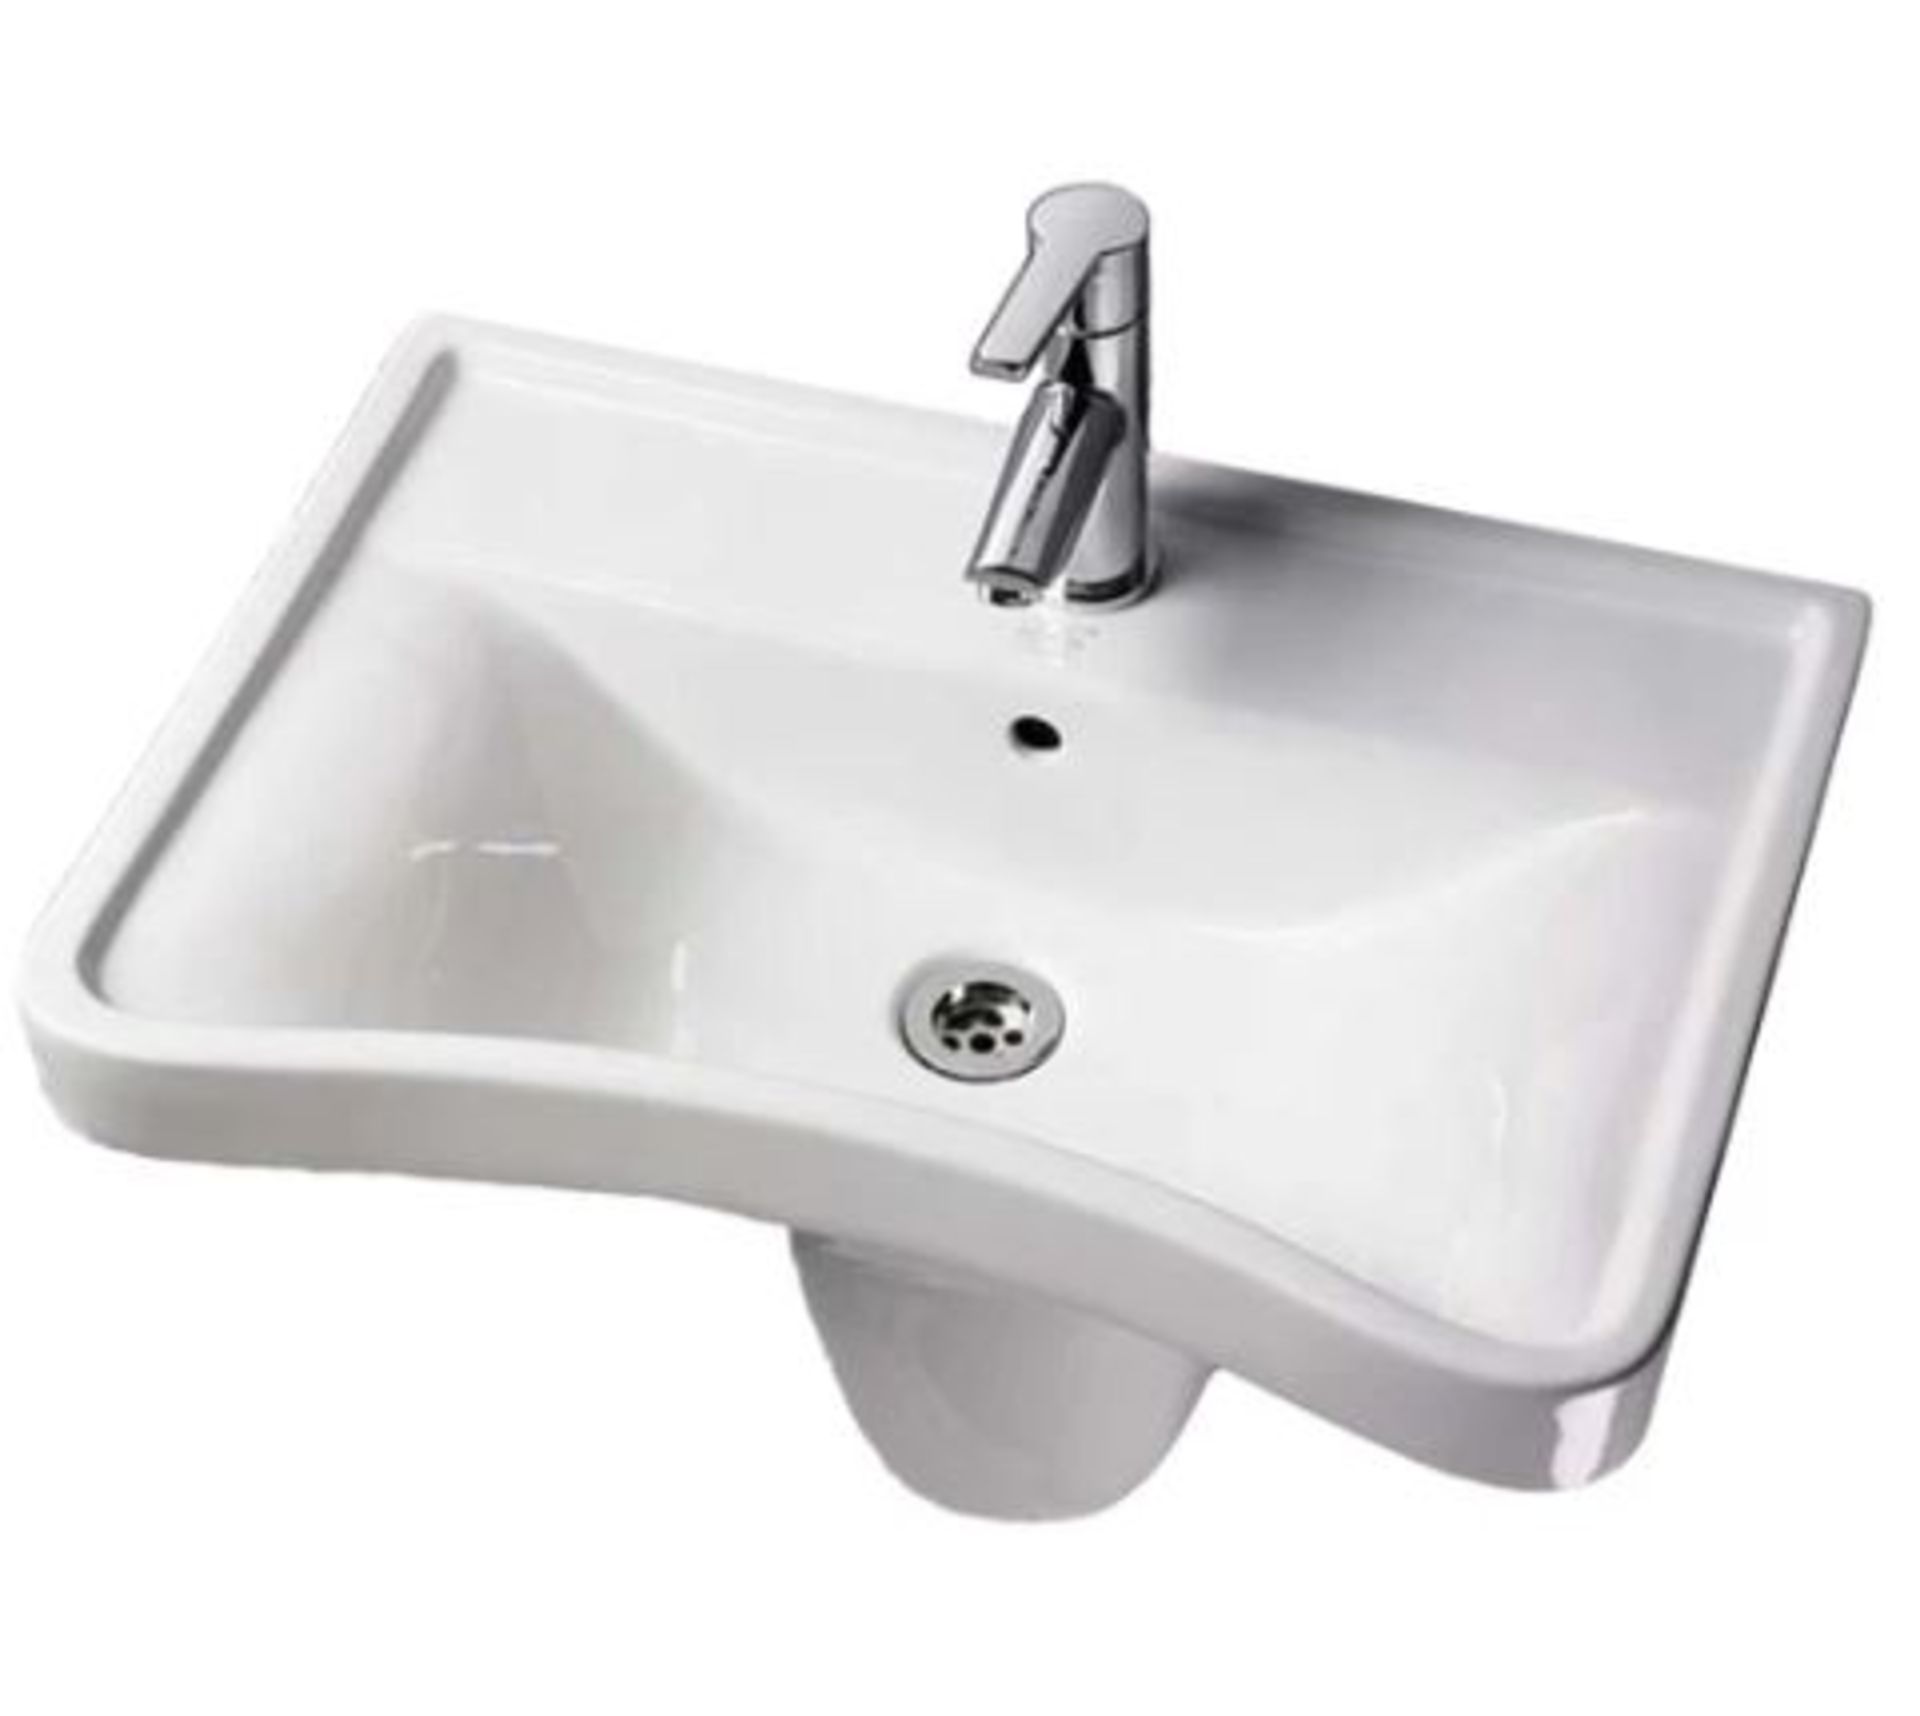 AKW B600 Wash Basin Only, White - Image 3 of 9